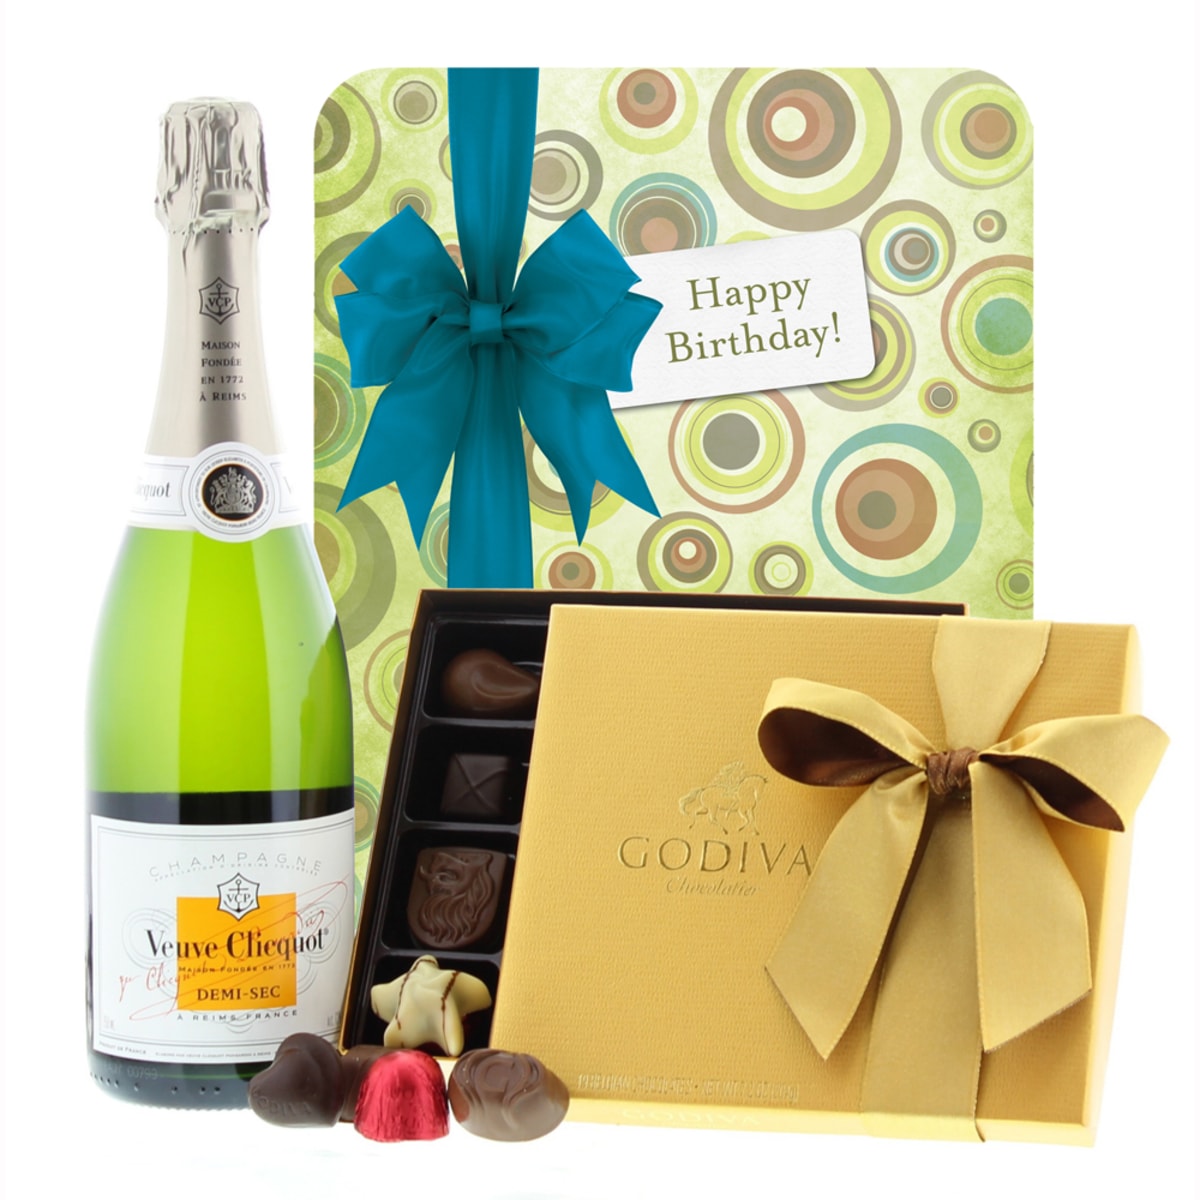 Veuve Clicquot Demi-Sec & 19-pc Godiva Chocolates Birthday Gift Set Gift Product Image